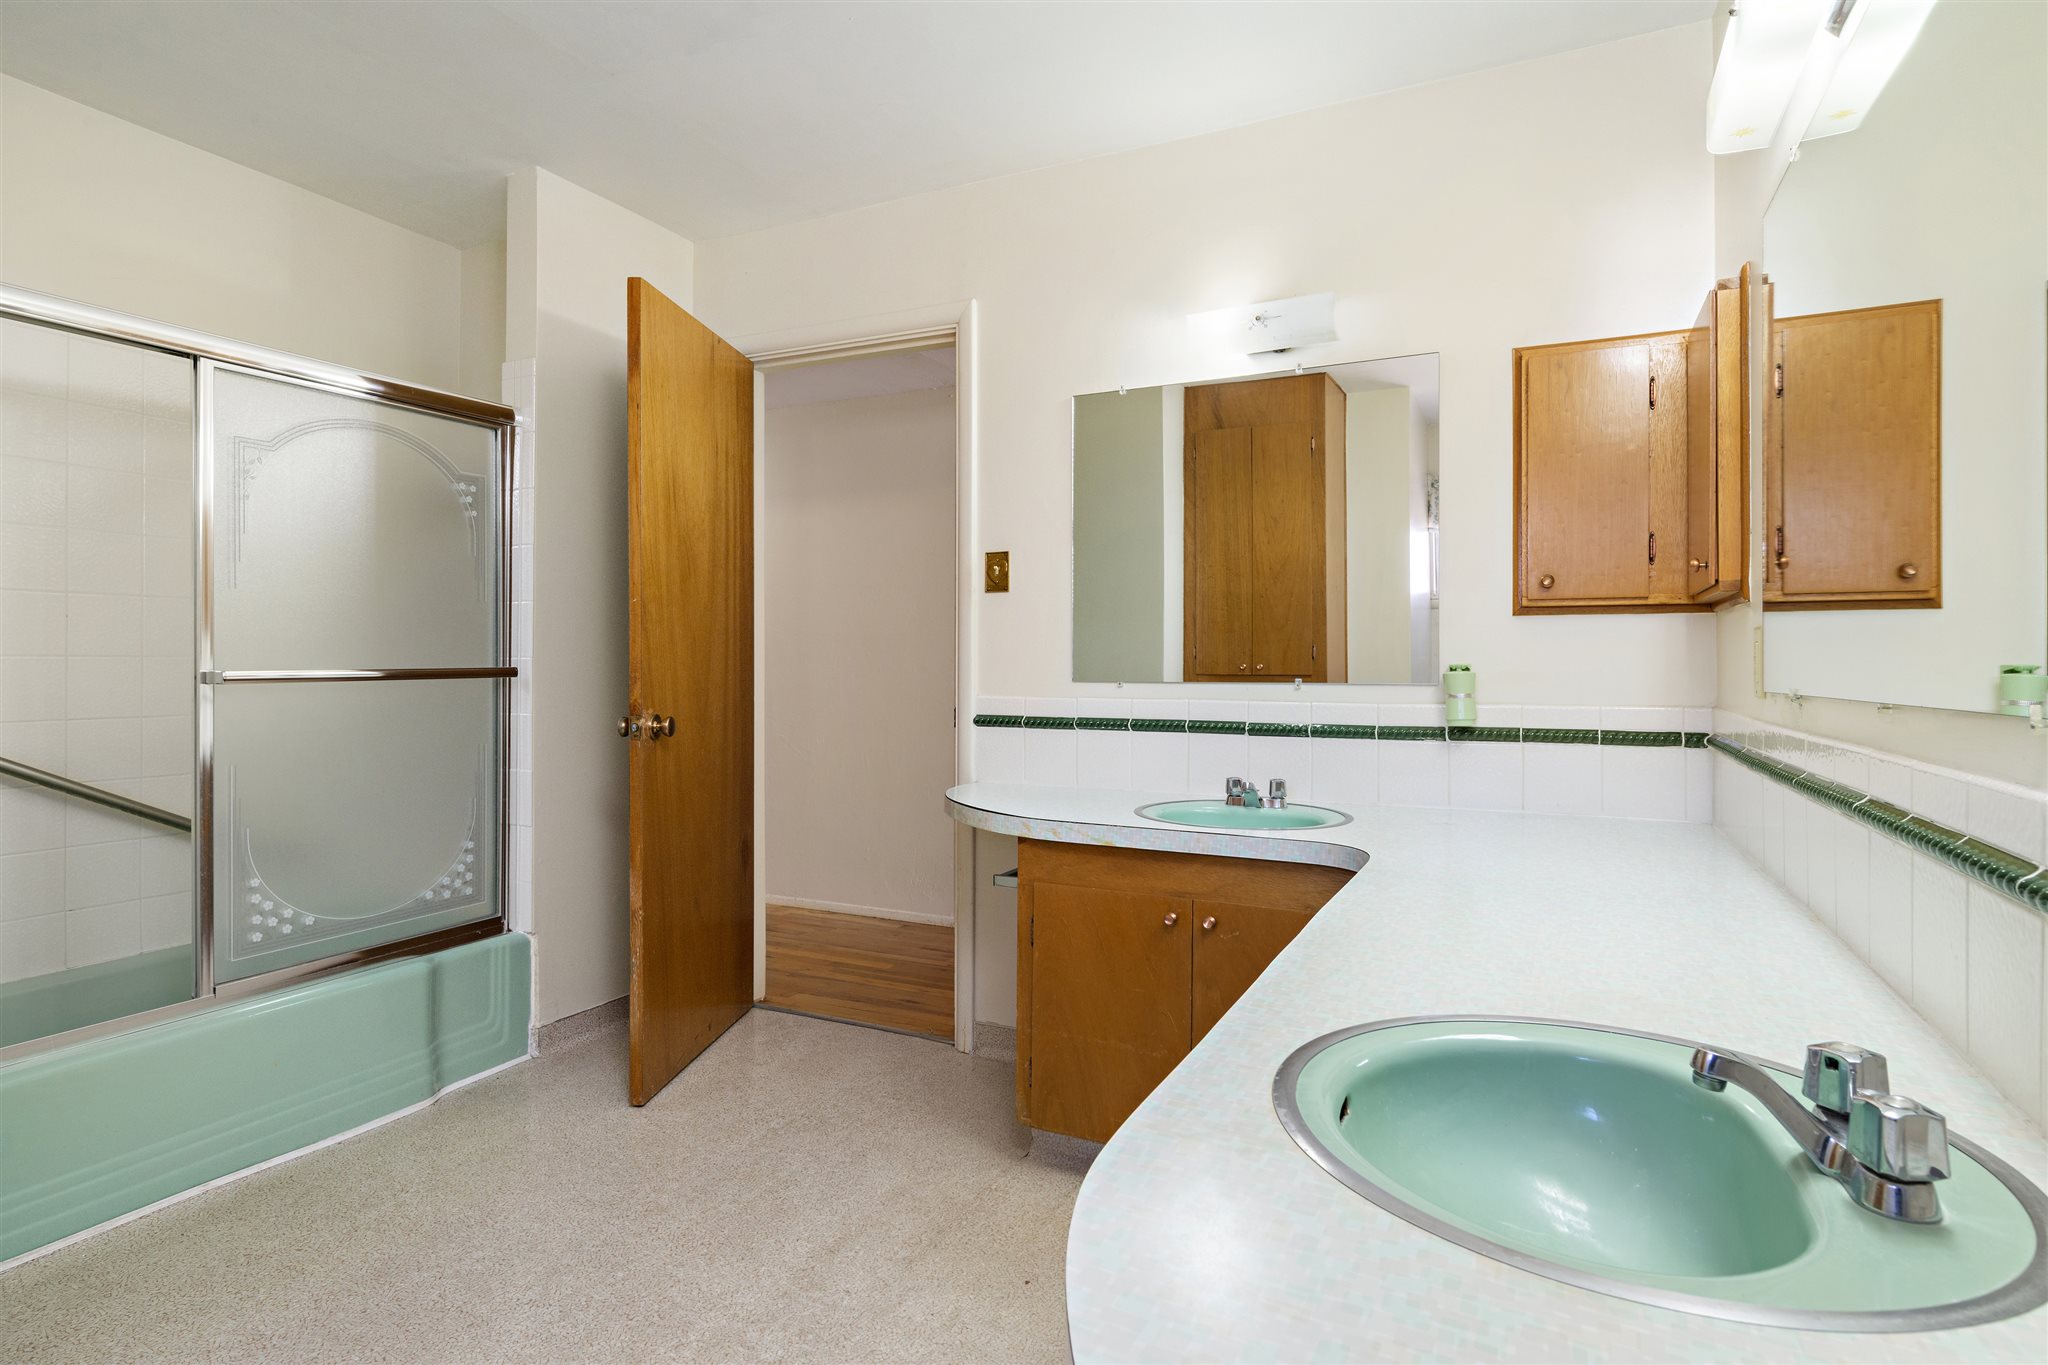 209 WILLIAMS, Santa Fe, New Mexico 87501, 4 Bedrooms Bedrooms, ,3 BathroomsBathrooms,Residential,For Sale,209 WILLIAMS,202100667